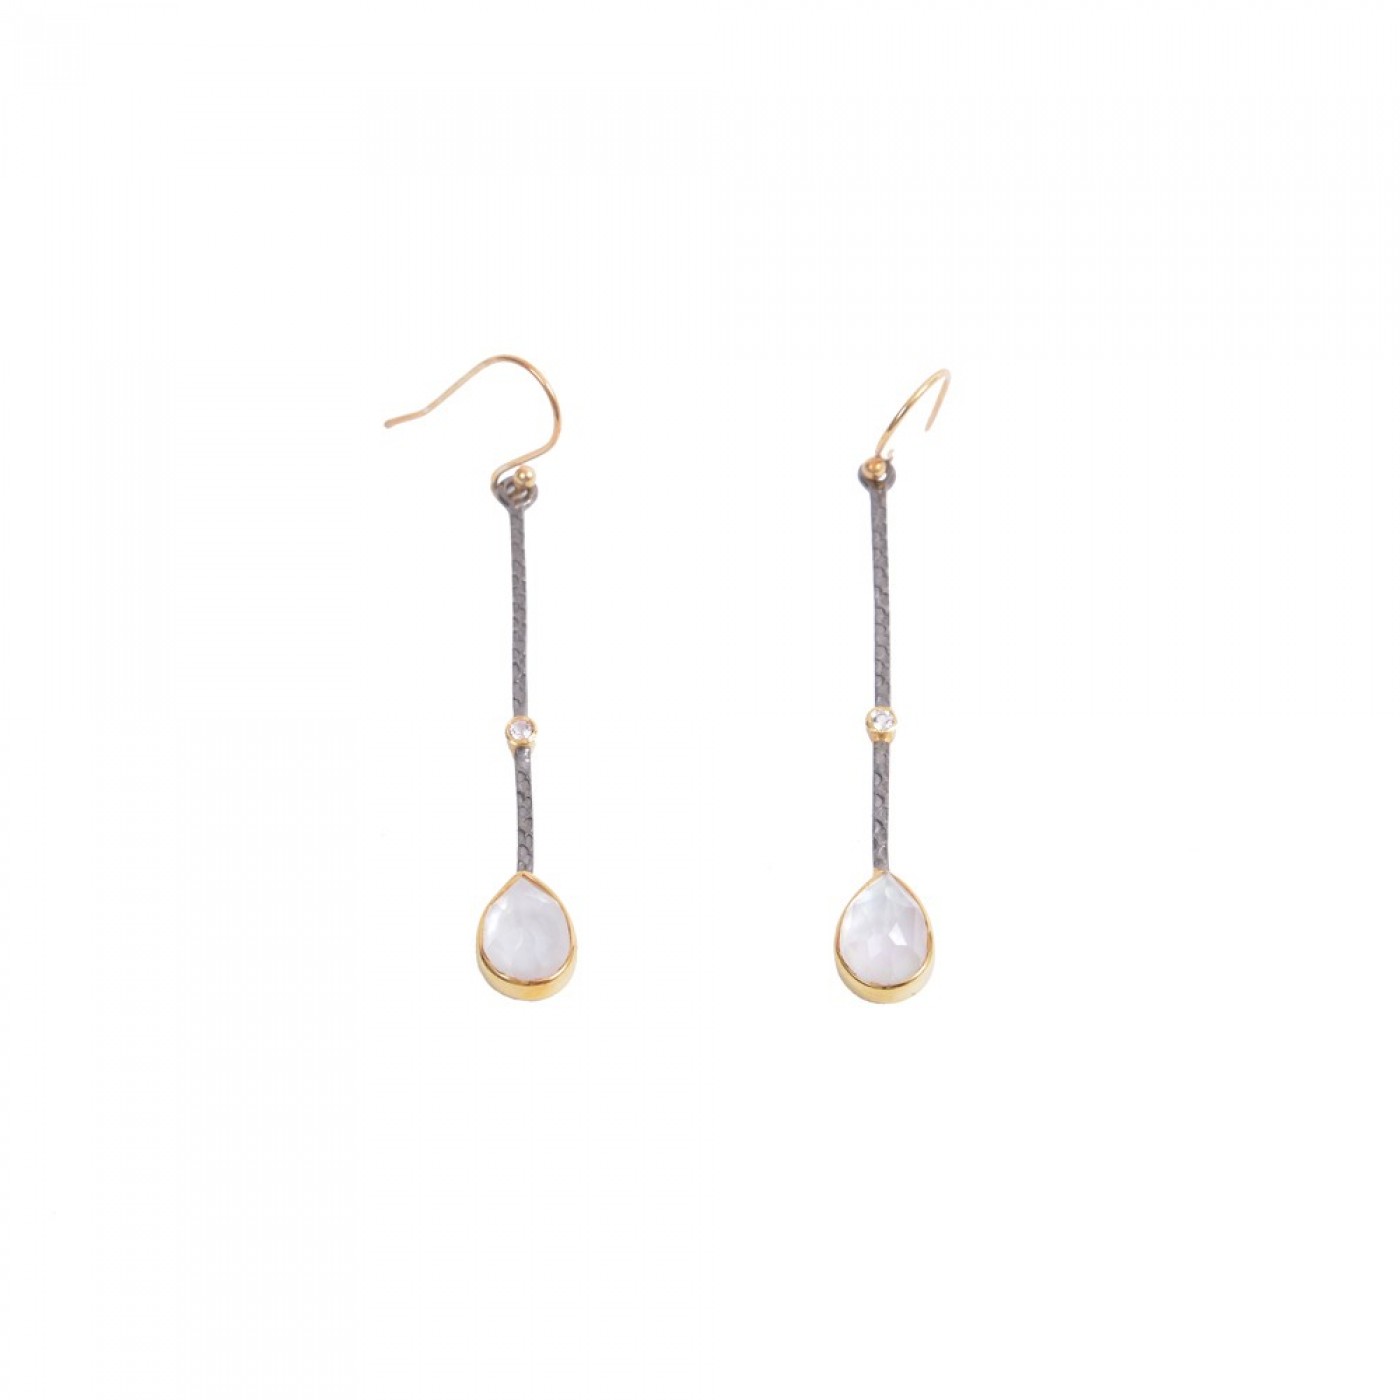 Handmade silver earrings with pearls